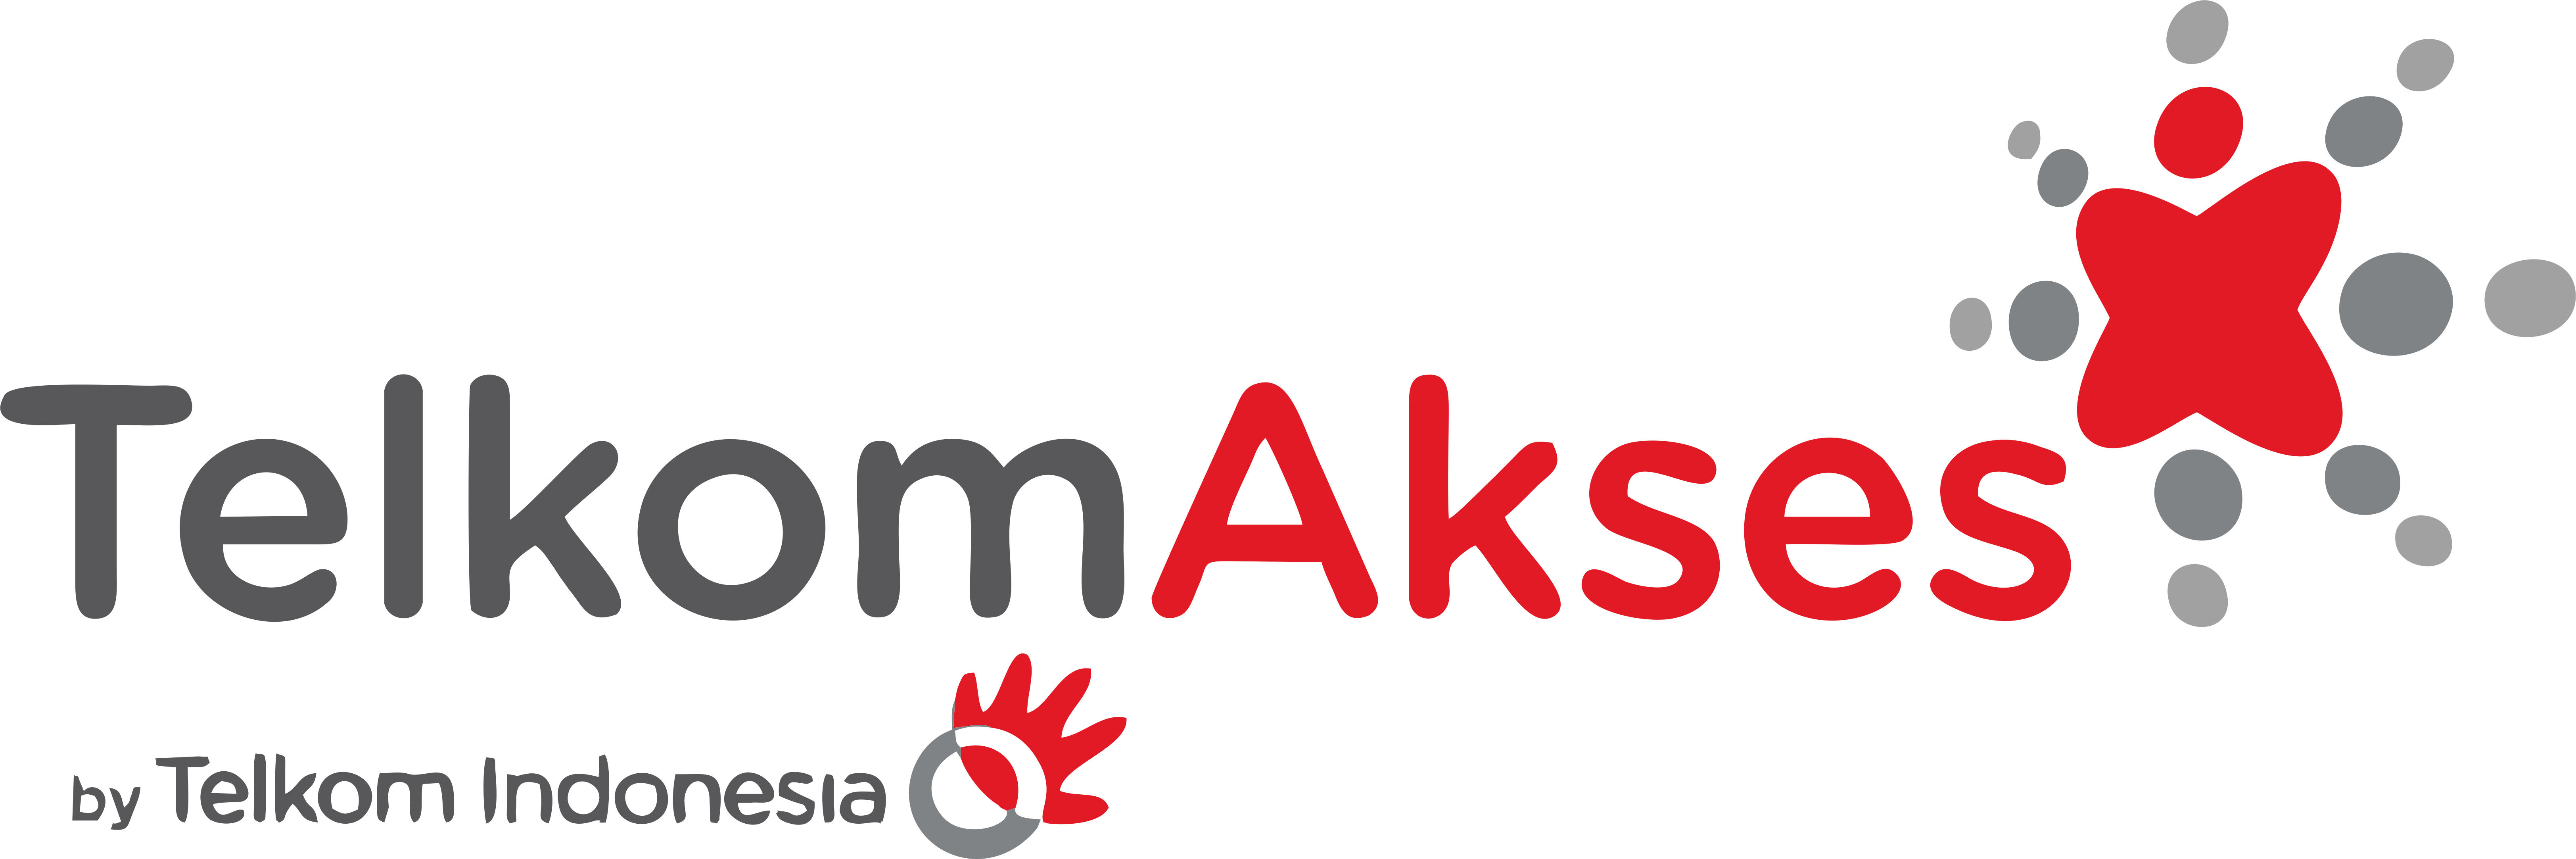 telkom akses logo